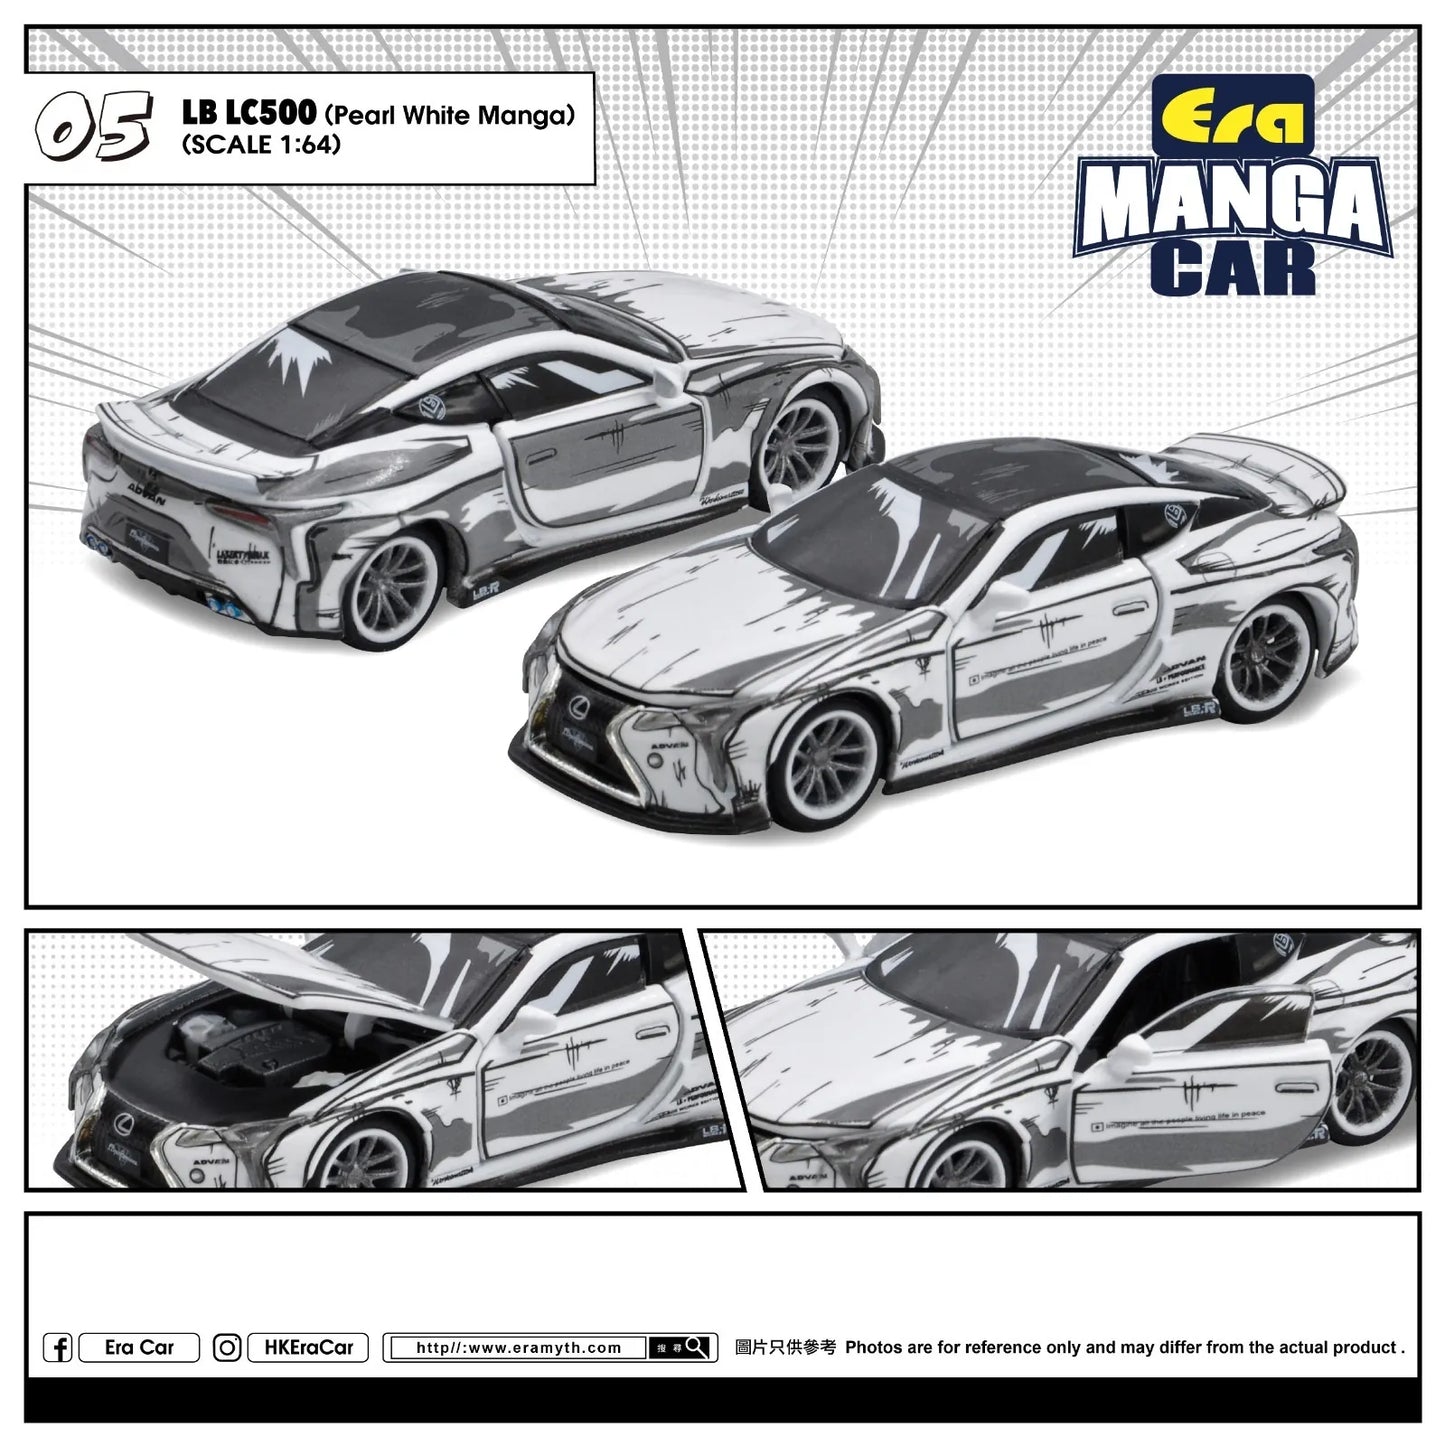 ERA CAR 1:64 #4 LB LC500 (Pearl White Manga)